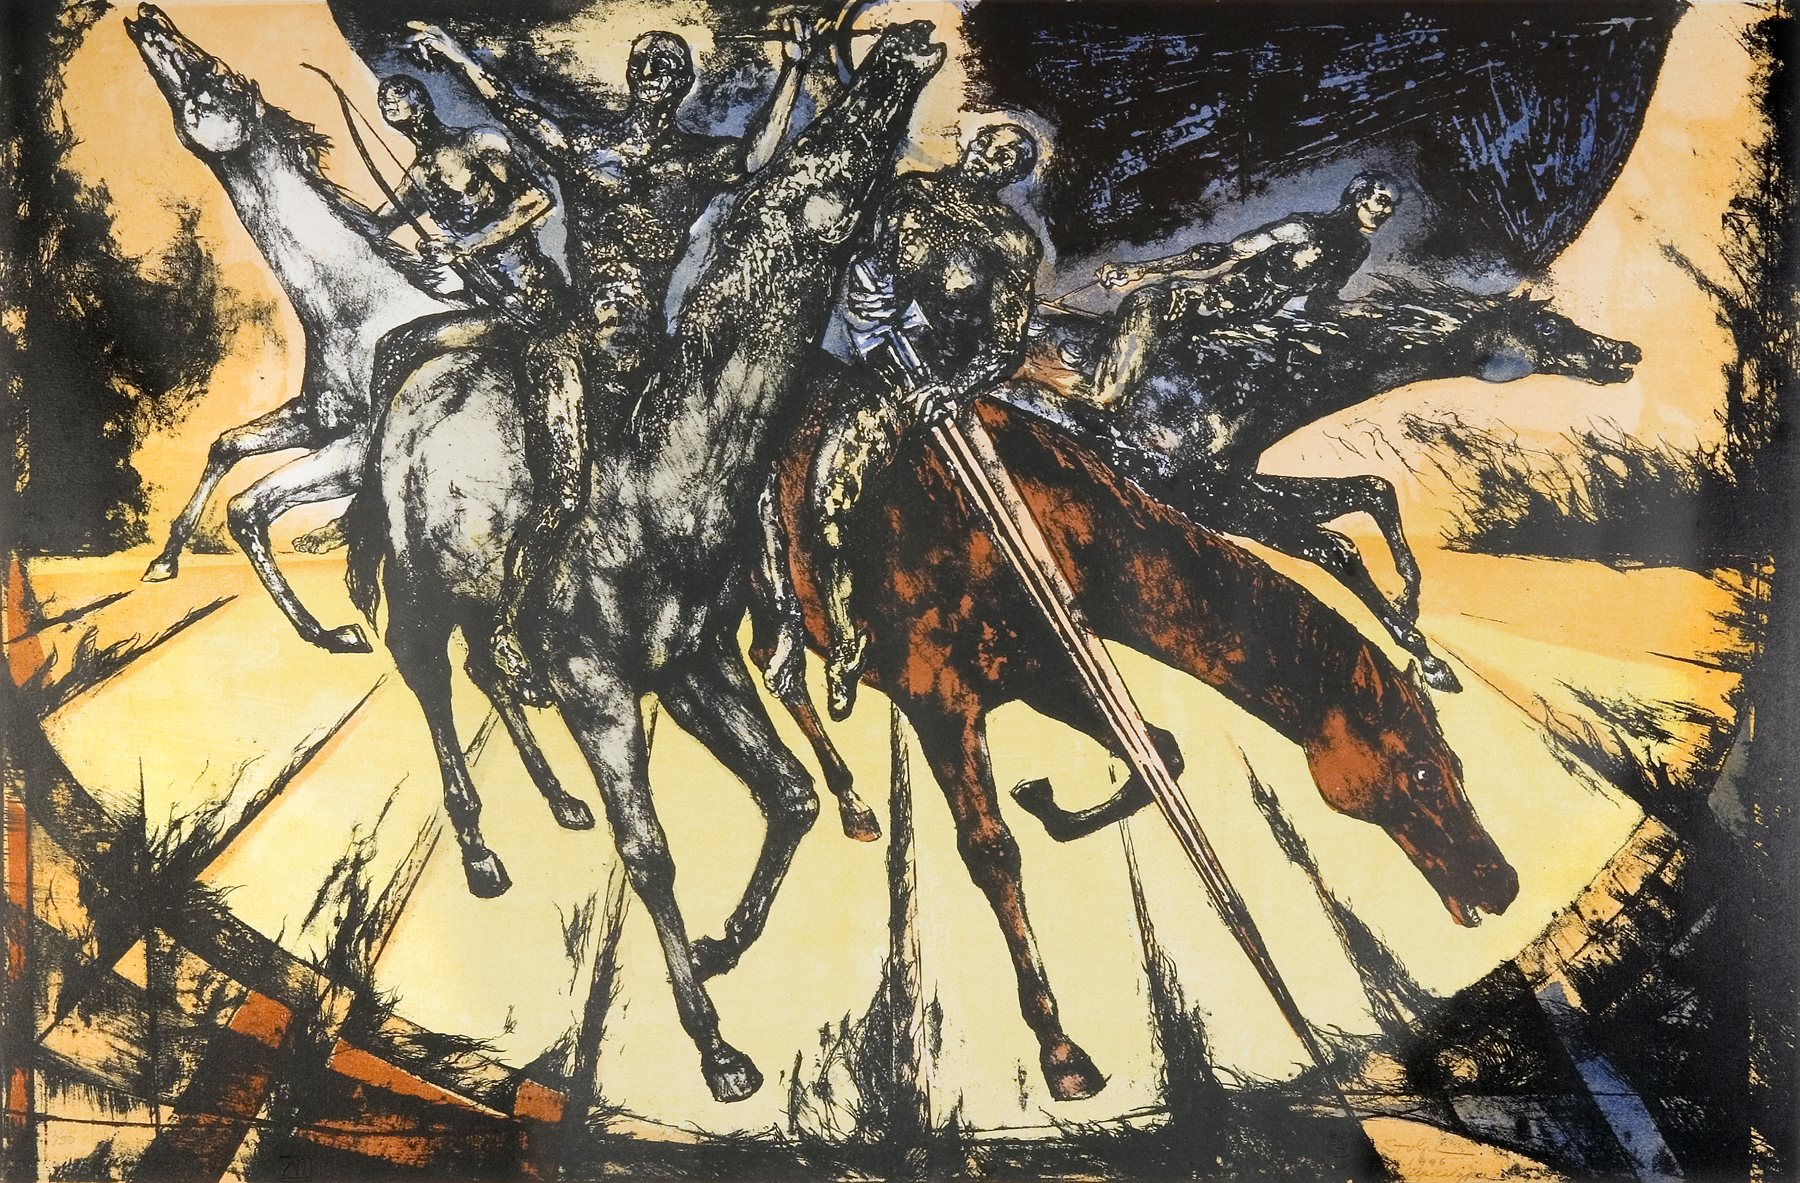 Dark Four Horsemen of the Apocalypse HD Wallpaper | Background Image